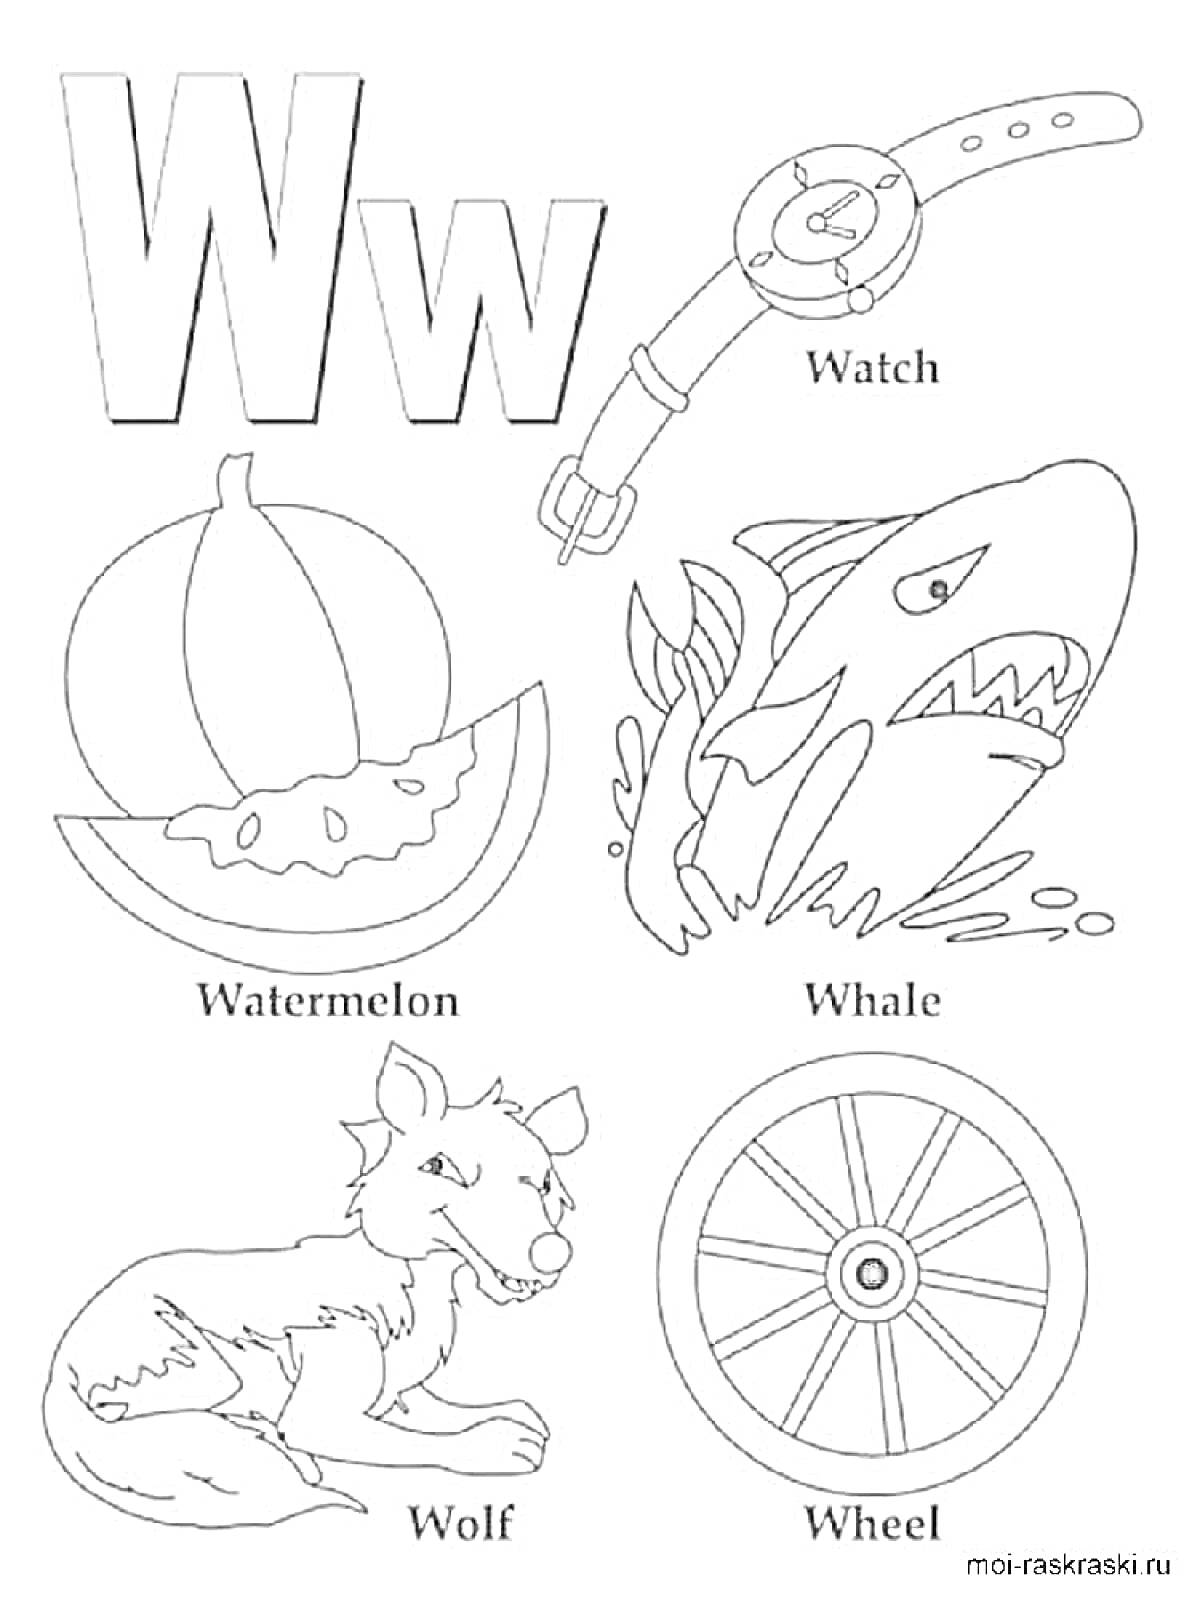 На раскраске изображено: Английский алфавит, Буква W, Часы, Арбуз, Волк, Колеса, Киты